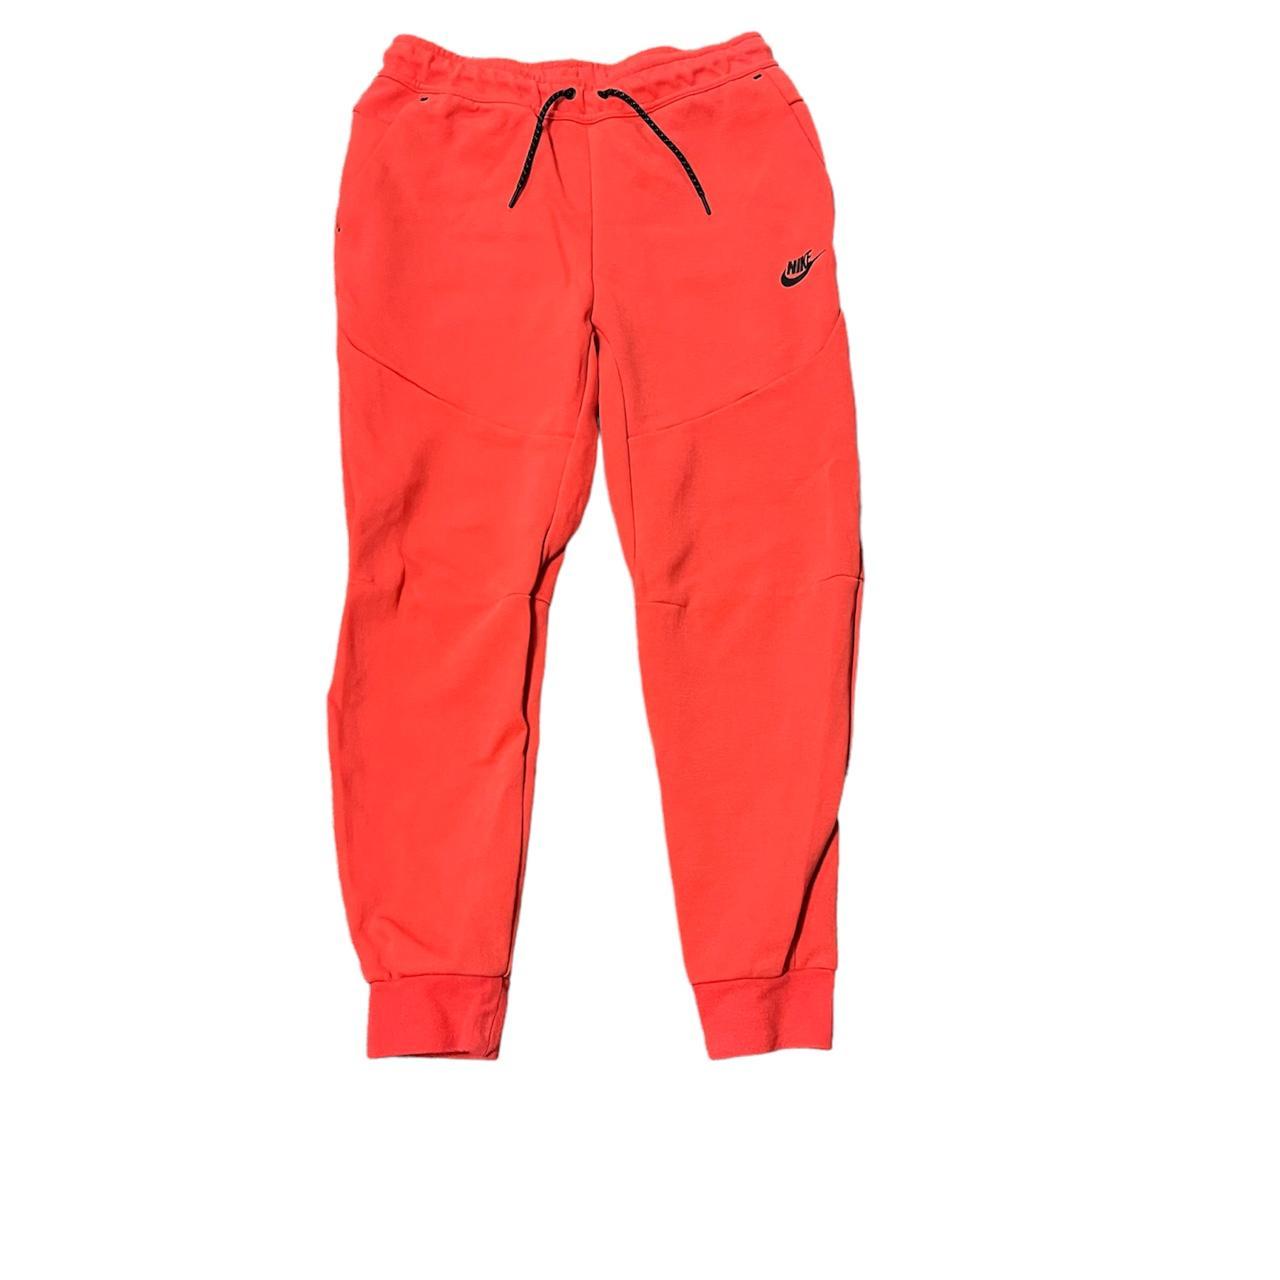 Nike tech pants red #tech #nike - Depop